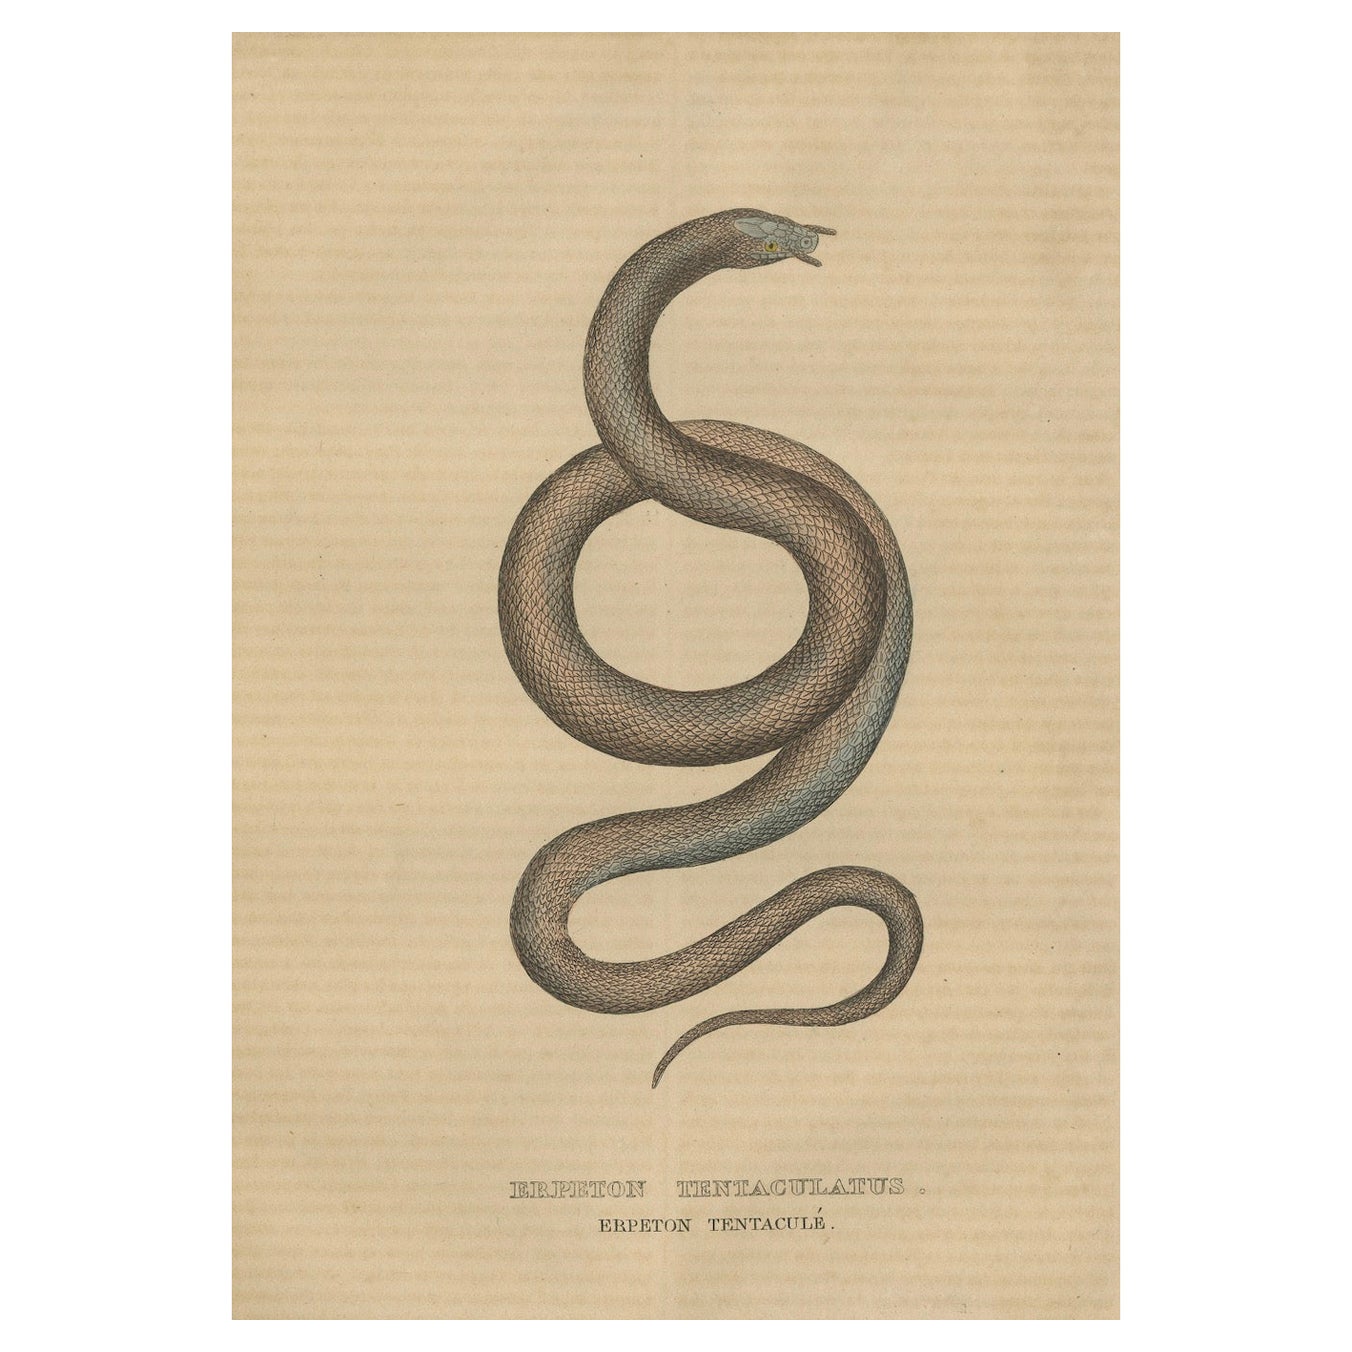 Aquatic Ambush: Hand-Colored Engraving of The Tentacled Snake, 1845